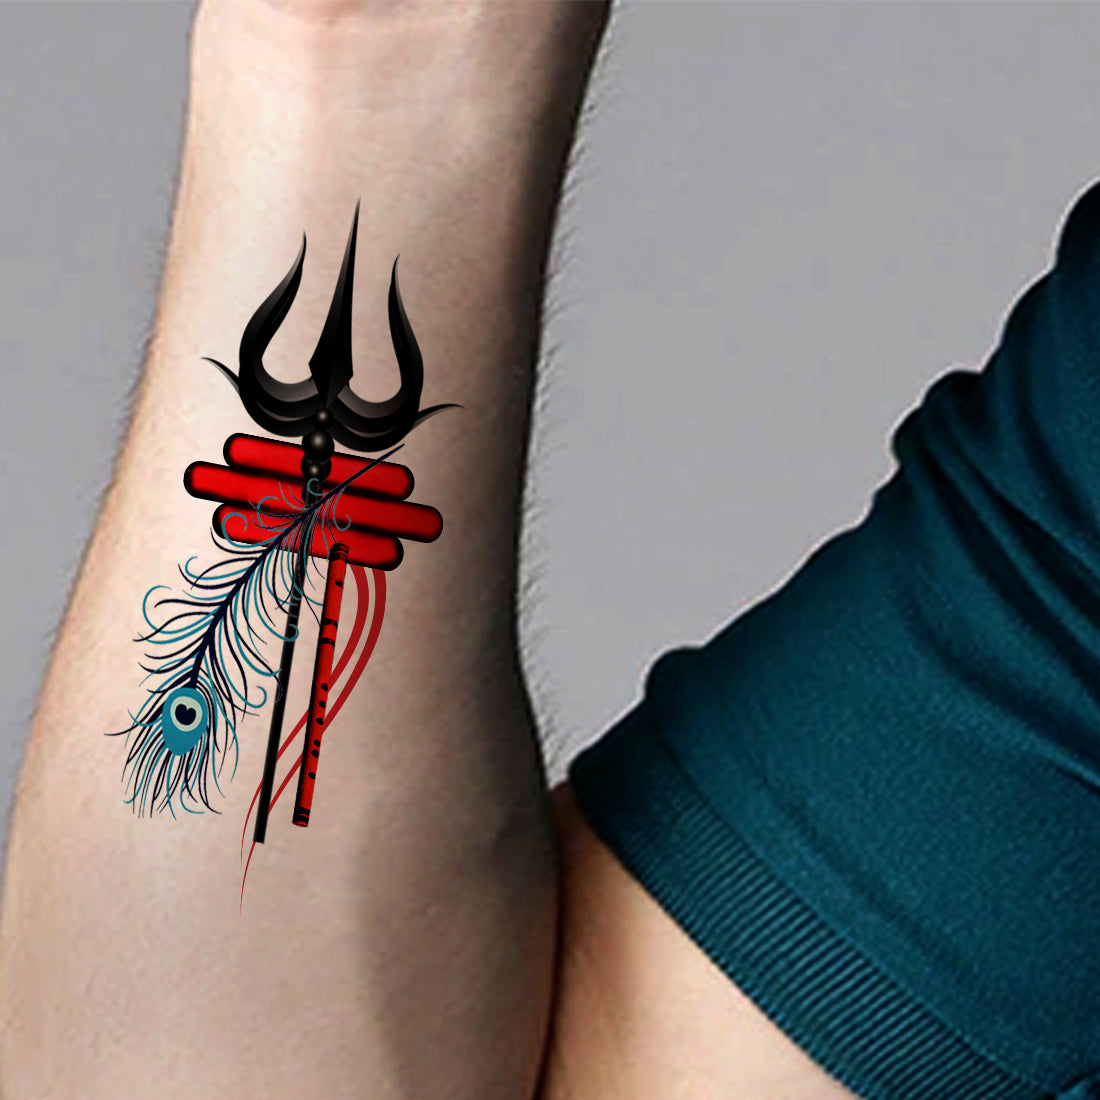 Shivling Tattoo - Tattoos Designs